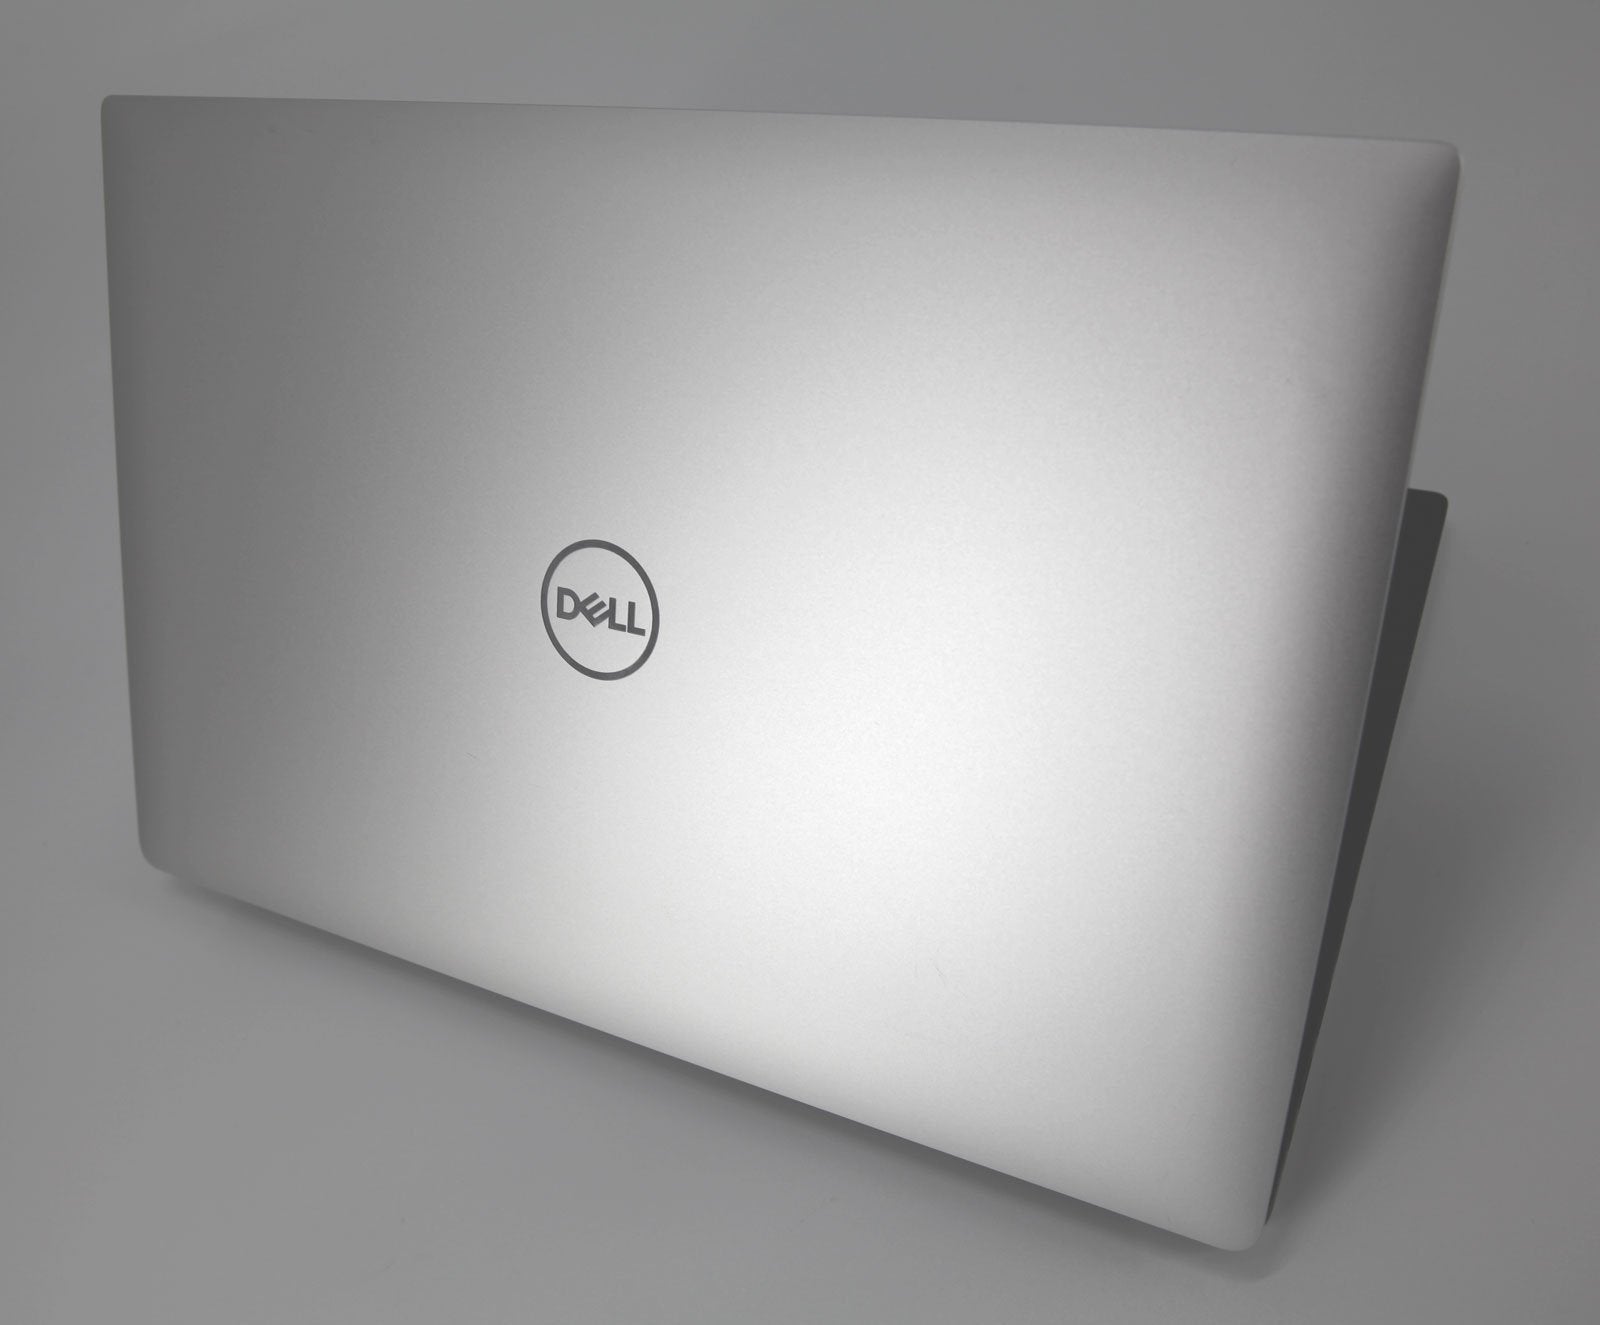 Dell Precision 5530 CAD Laptop: Core i7-8850H, 16GB RAM, 256GB SSD, P1000 1.9KG - CruiseTech